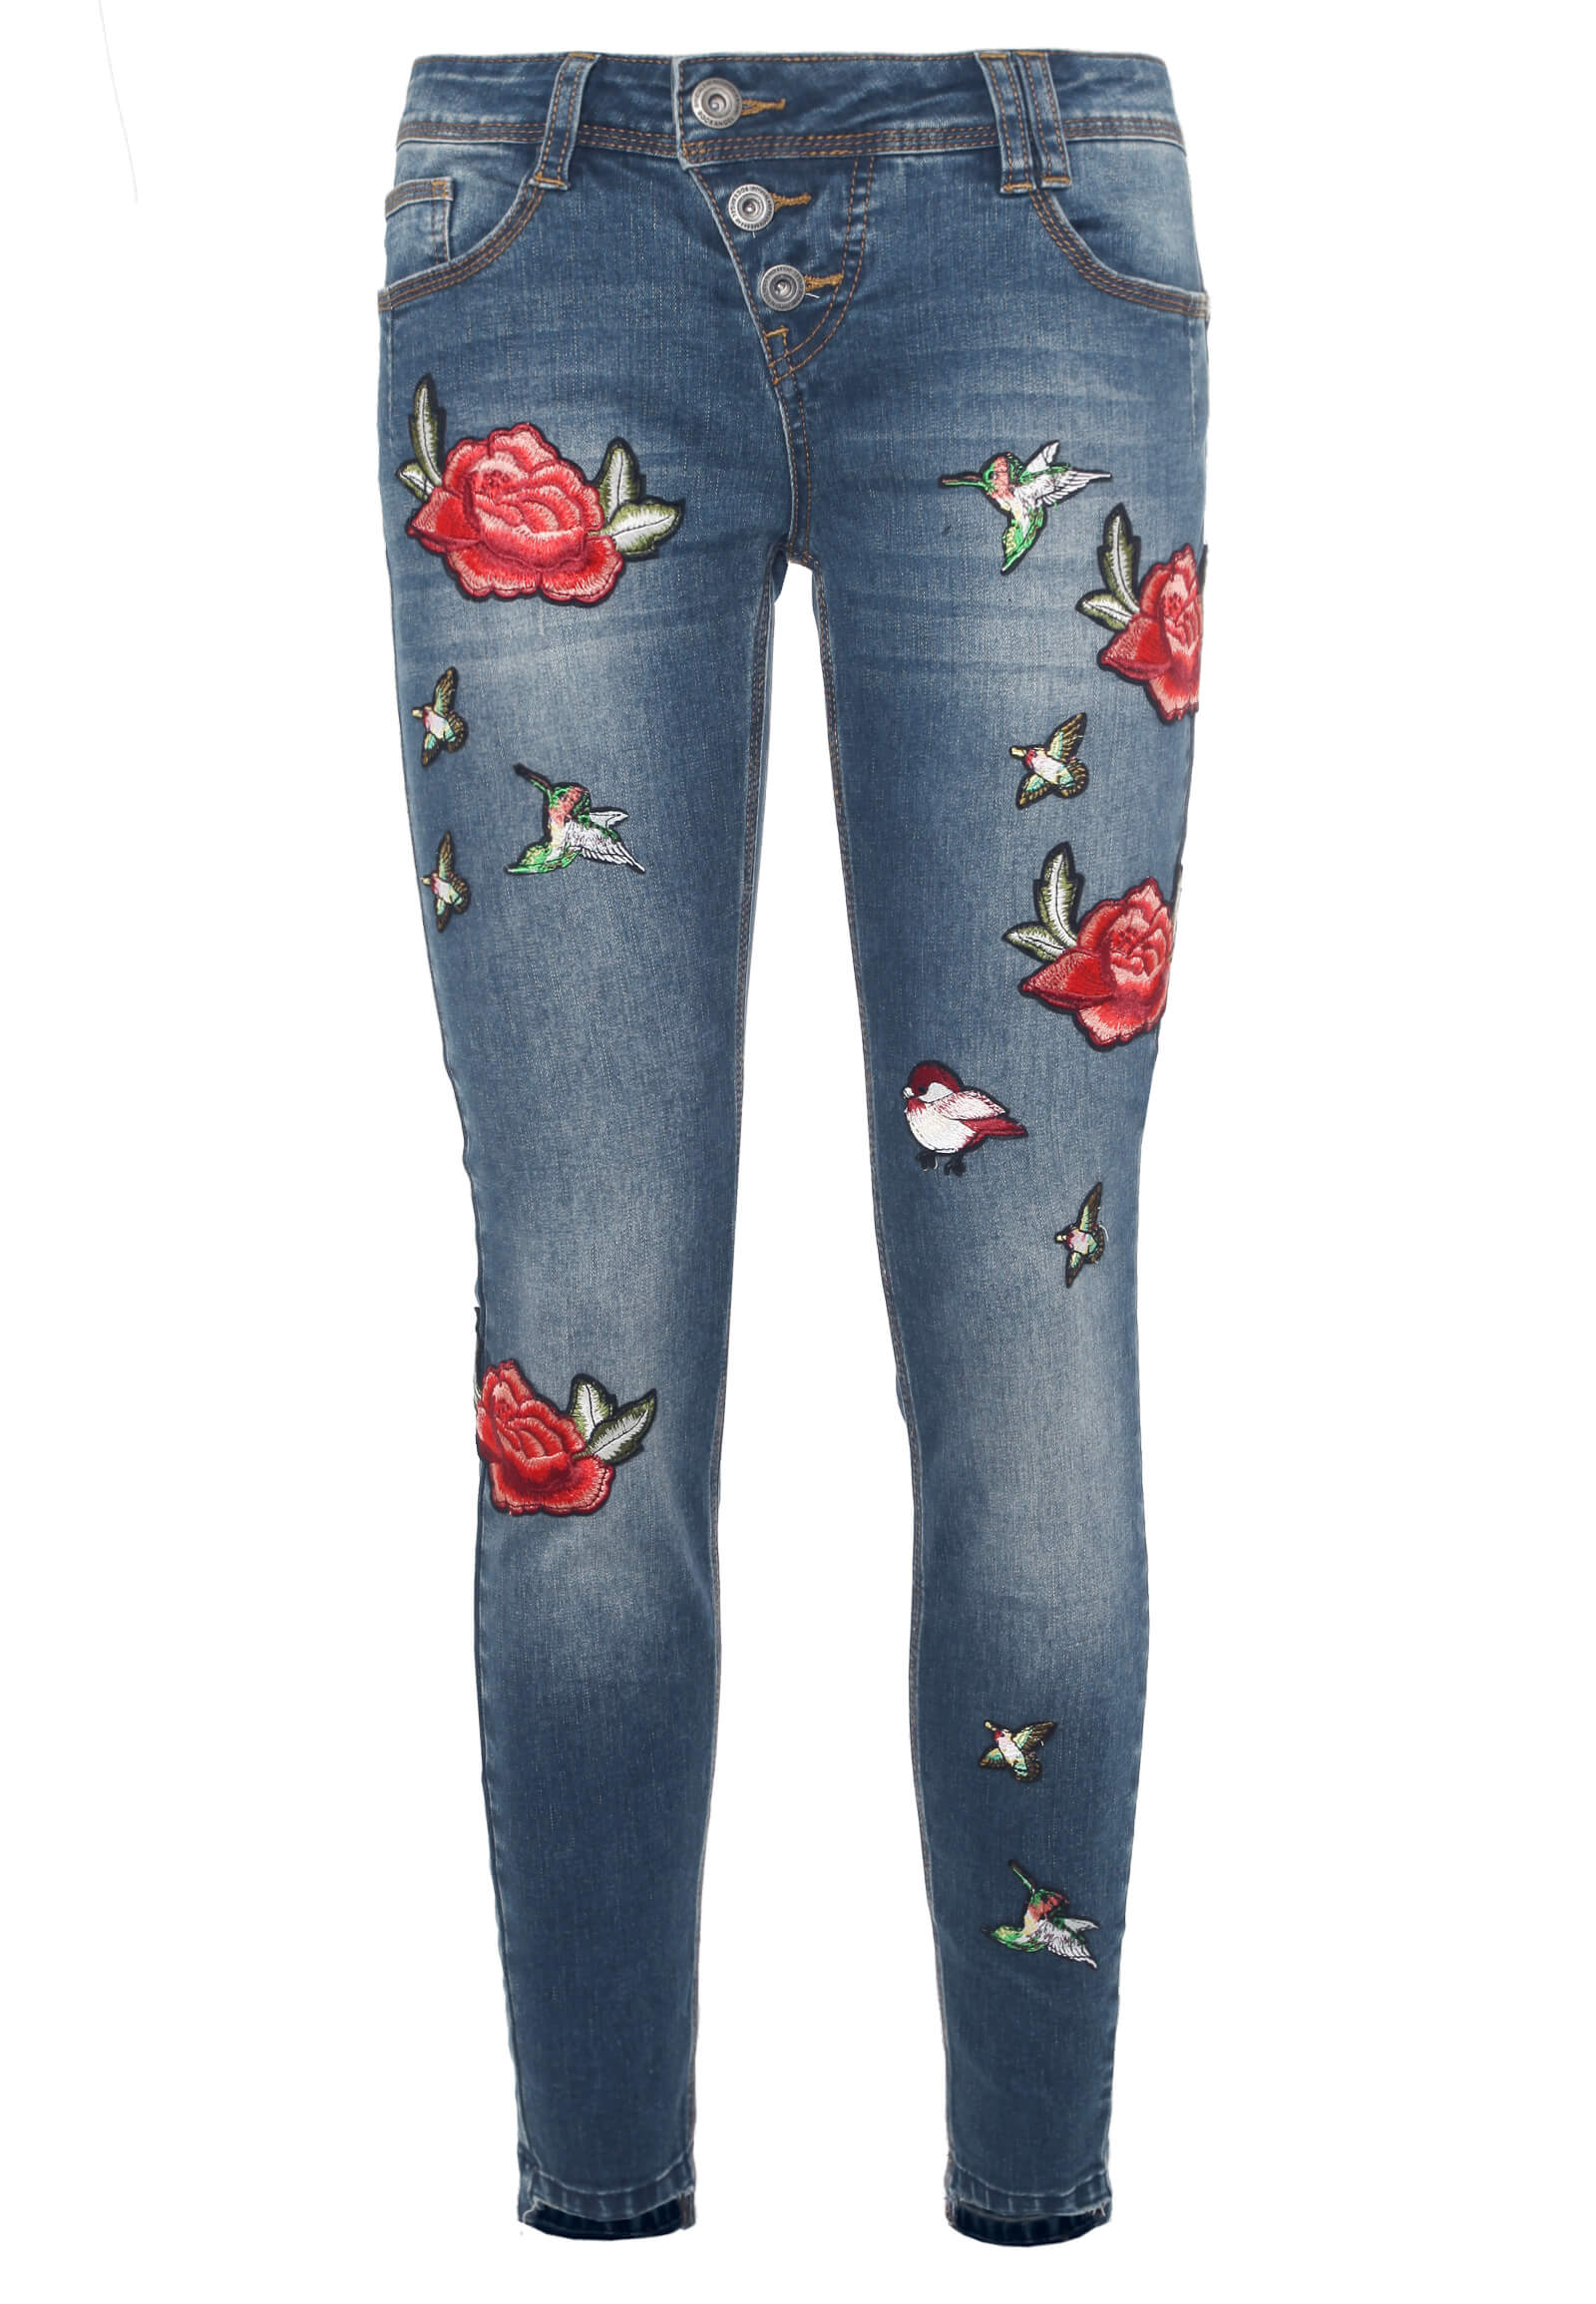 Jeans mit Rosen Patches